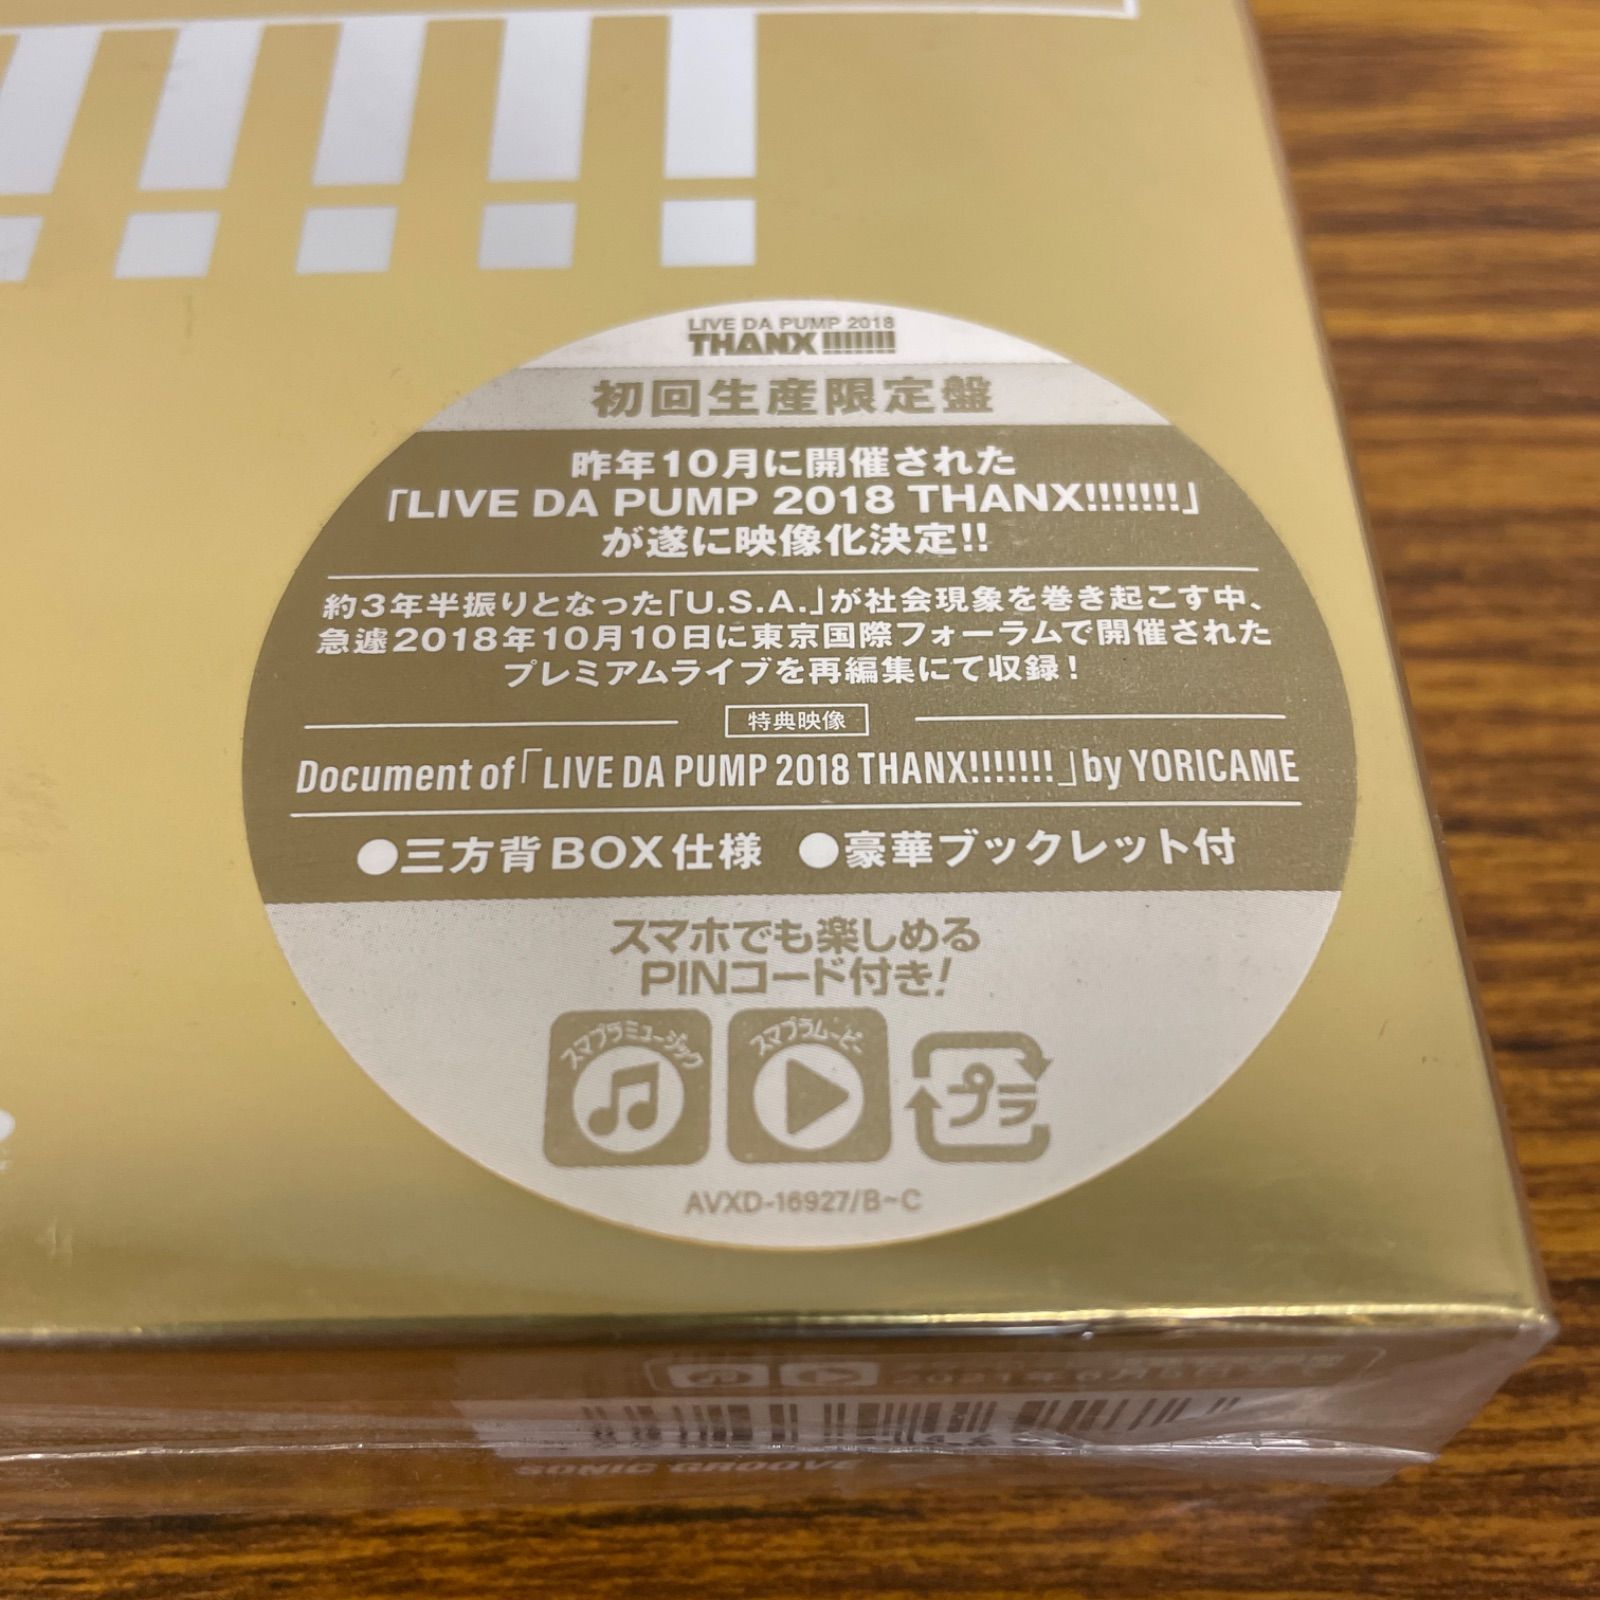 LIVE DA Pump 2018 THANX!!!!!!! AT 東京国際フォーラム ホールA (初回生産限定盤) Blu-ray